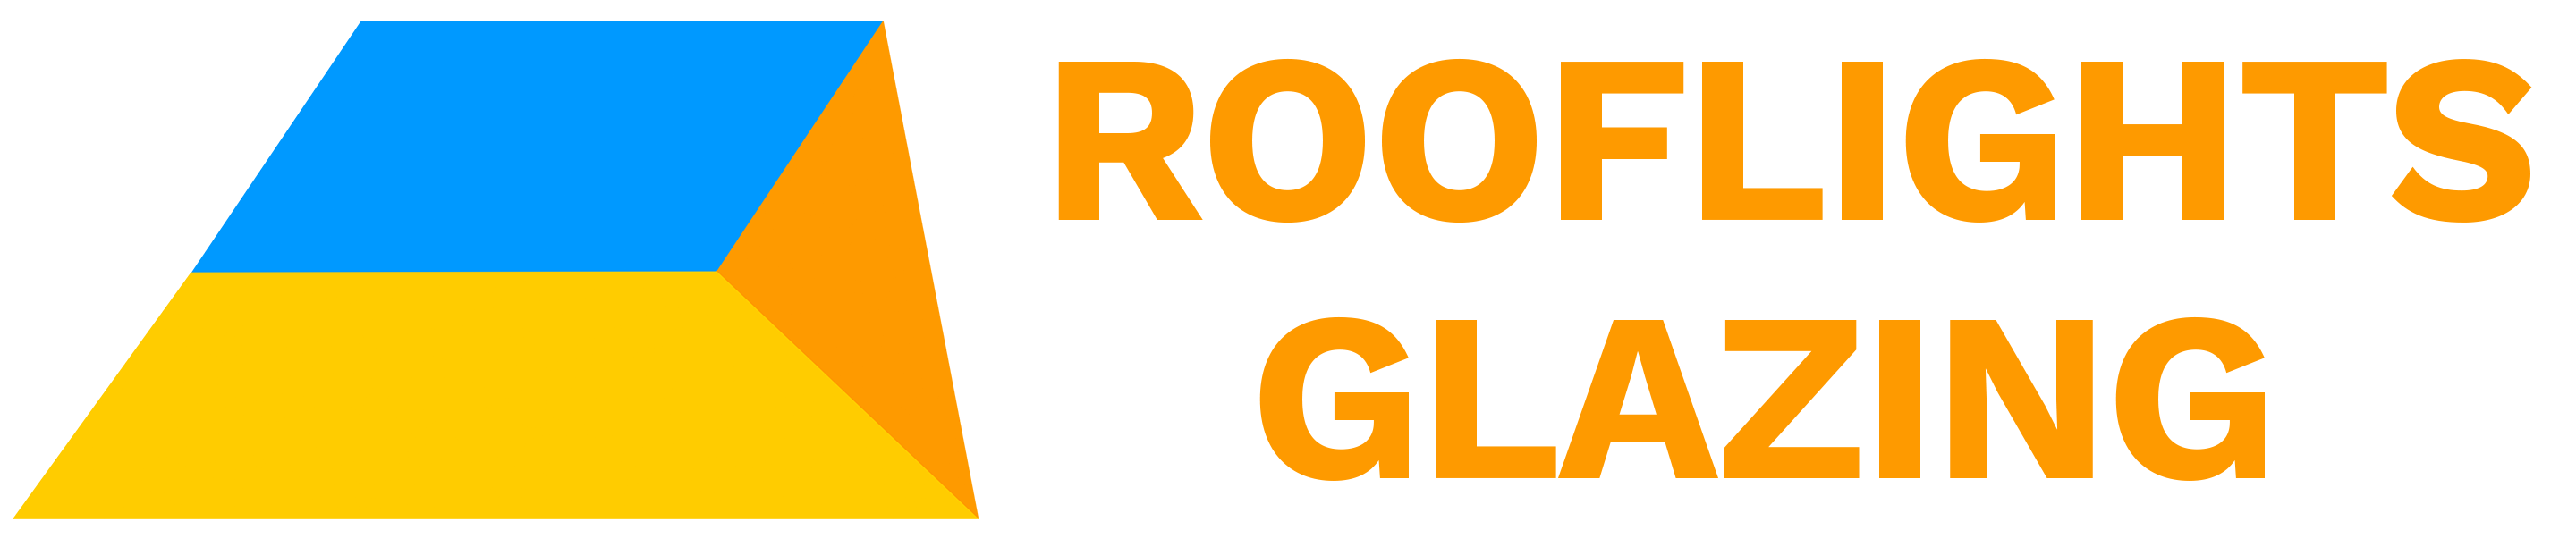 Rooflights & Glazing roof light manufacturer